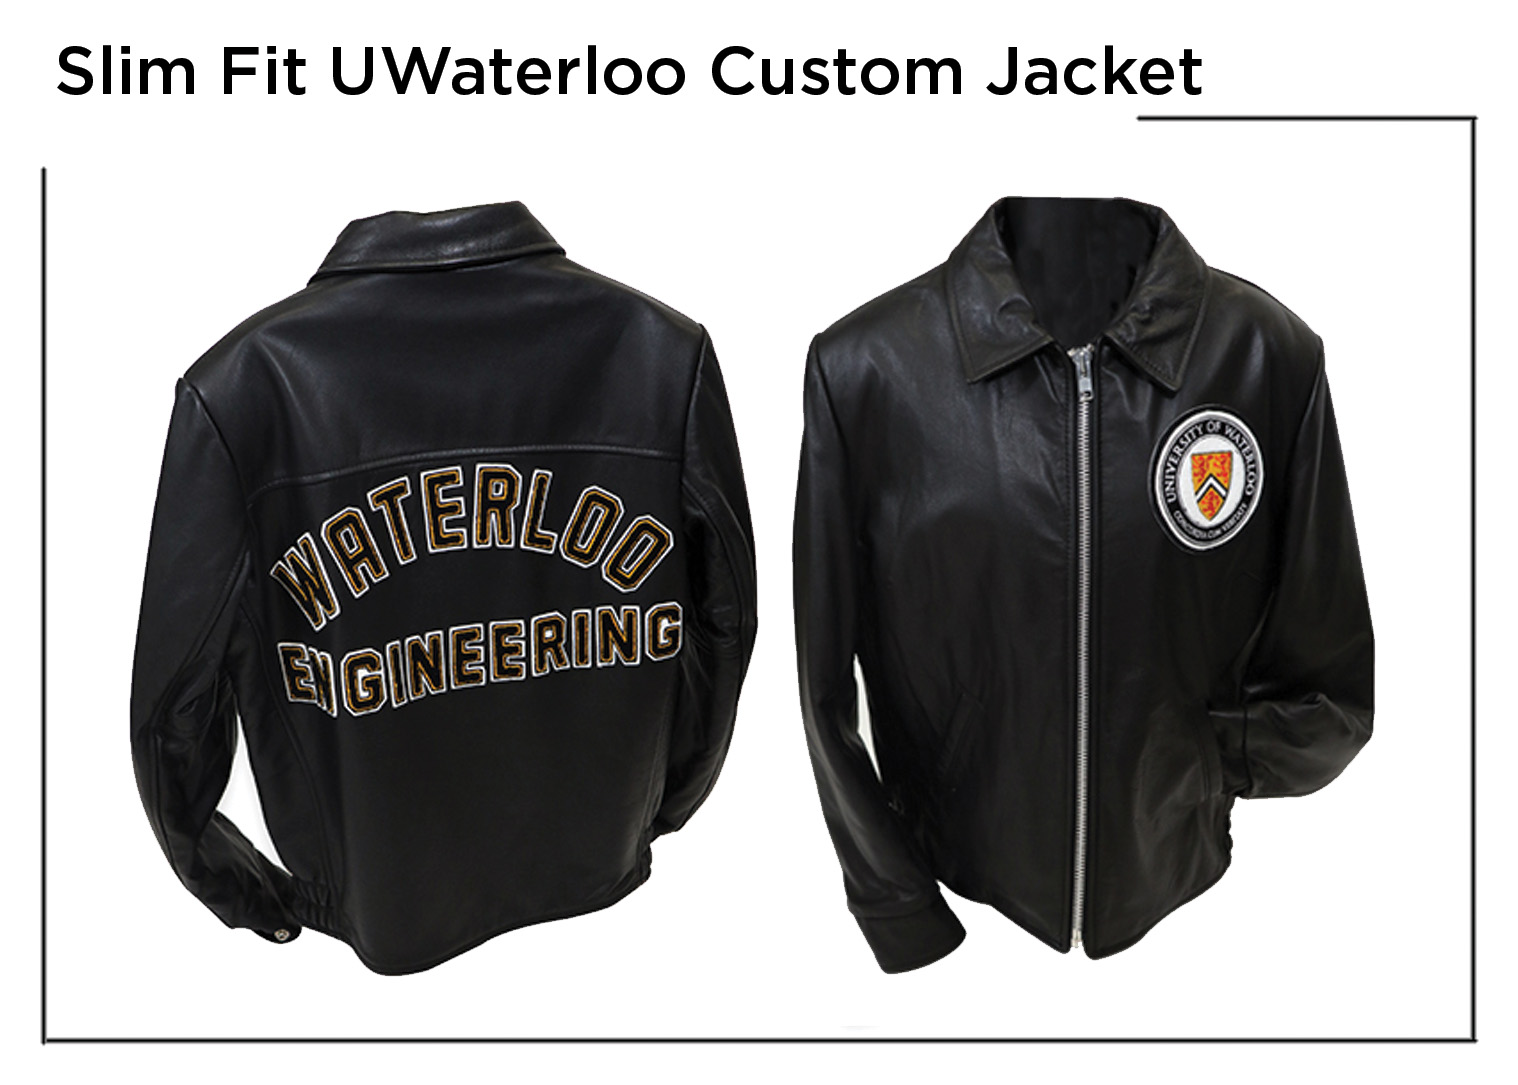 Ladies UWaterloo Custom Jacket with University of Waterloo in felt letters on the back